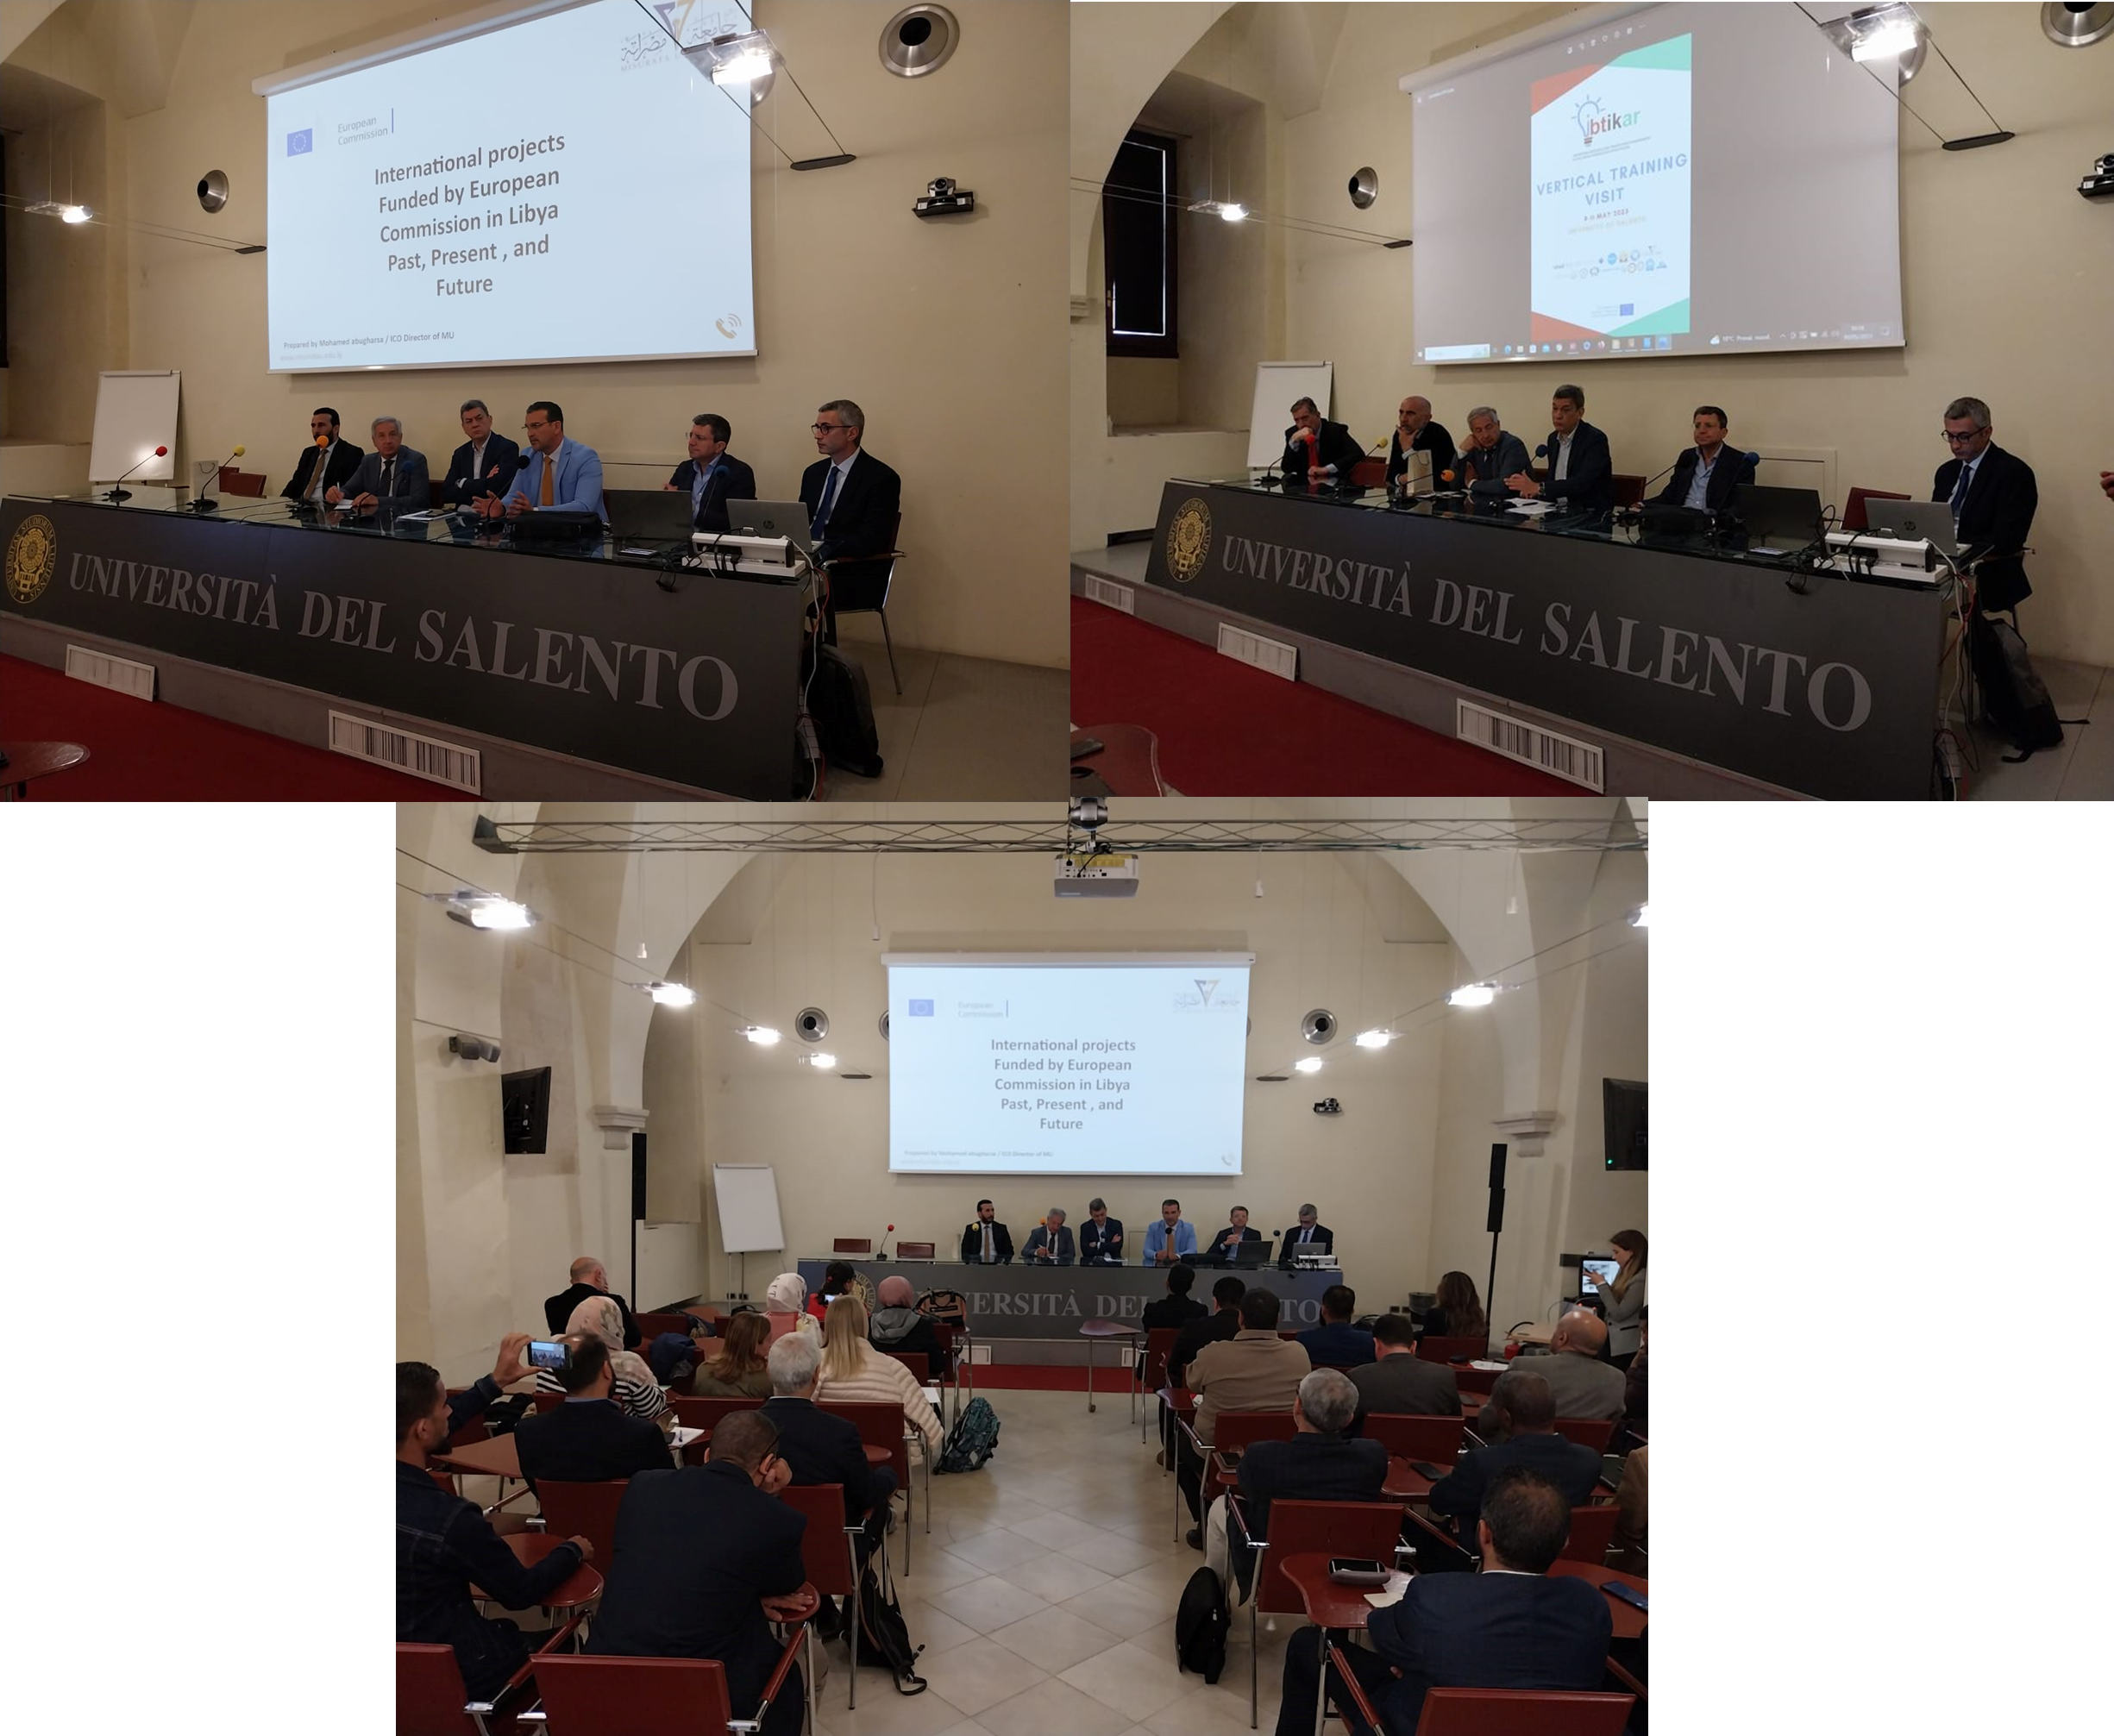 The 3rd day|  IBTIKAR Vertical Training Visit at the Università del Salento  width=